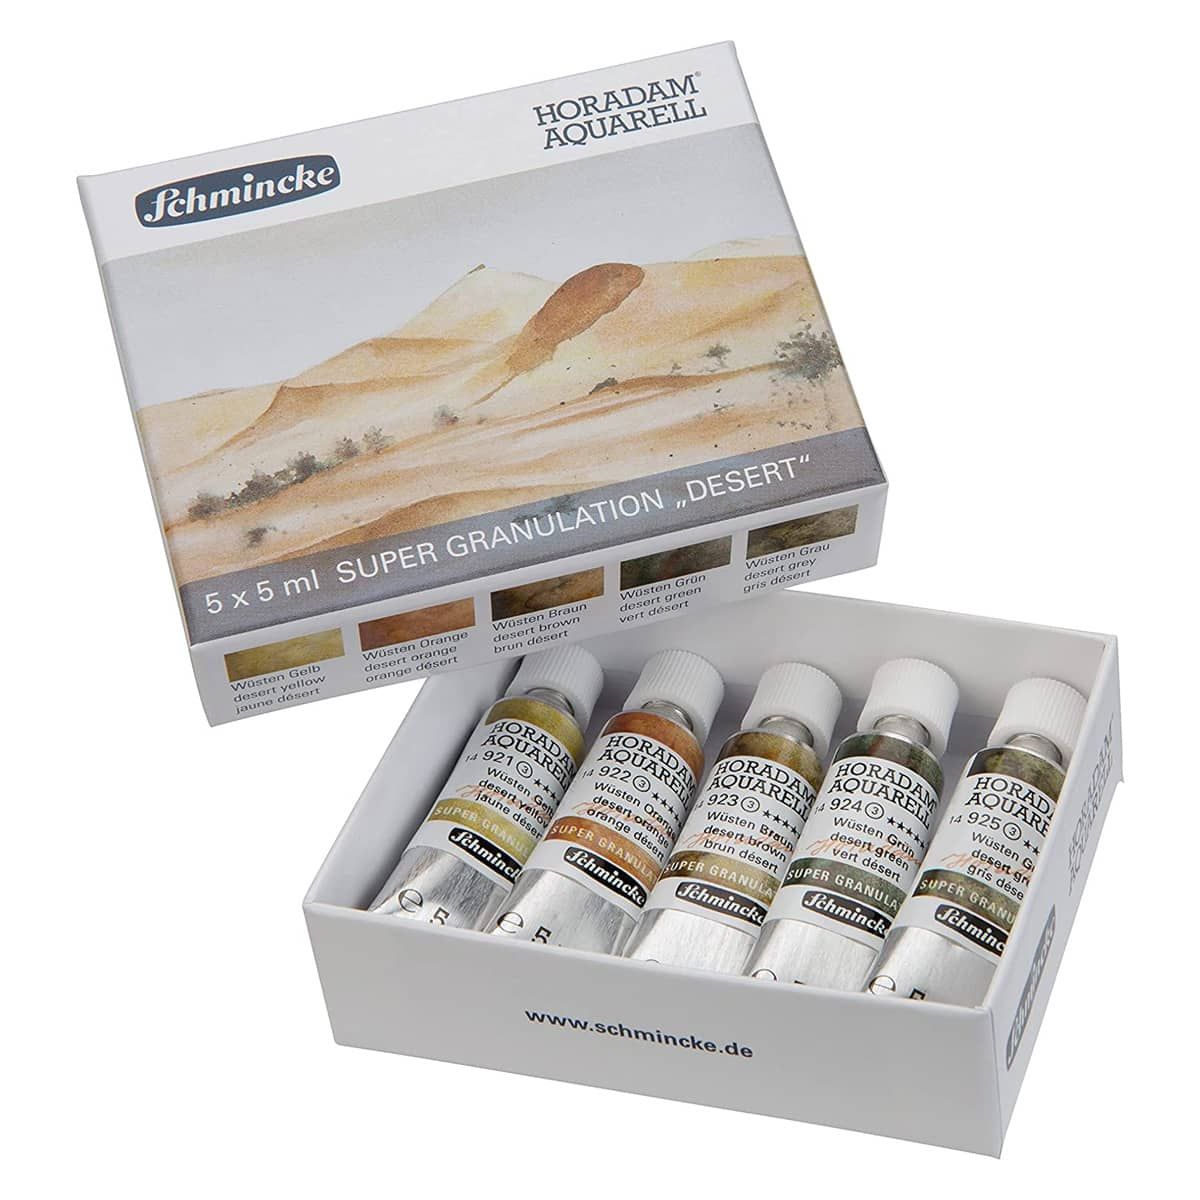 SCHMINCKE HORADAM AQUARELL WATERCOLOUR WOODEN BOX SUPER GRANULATION -  DESERT SERIES SET OF 5 X 15 ML - Artemiranda